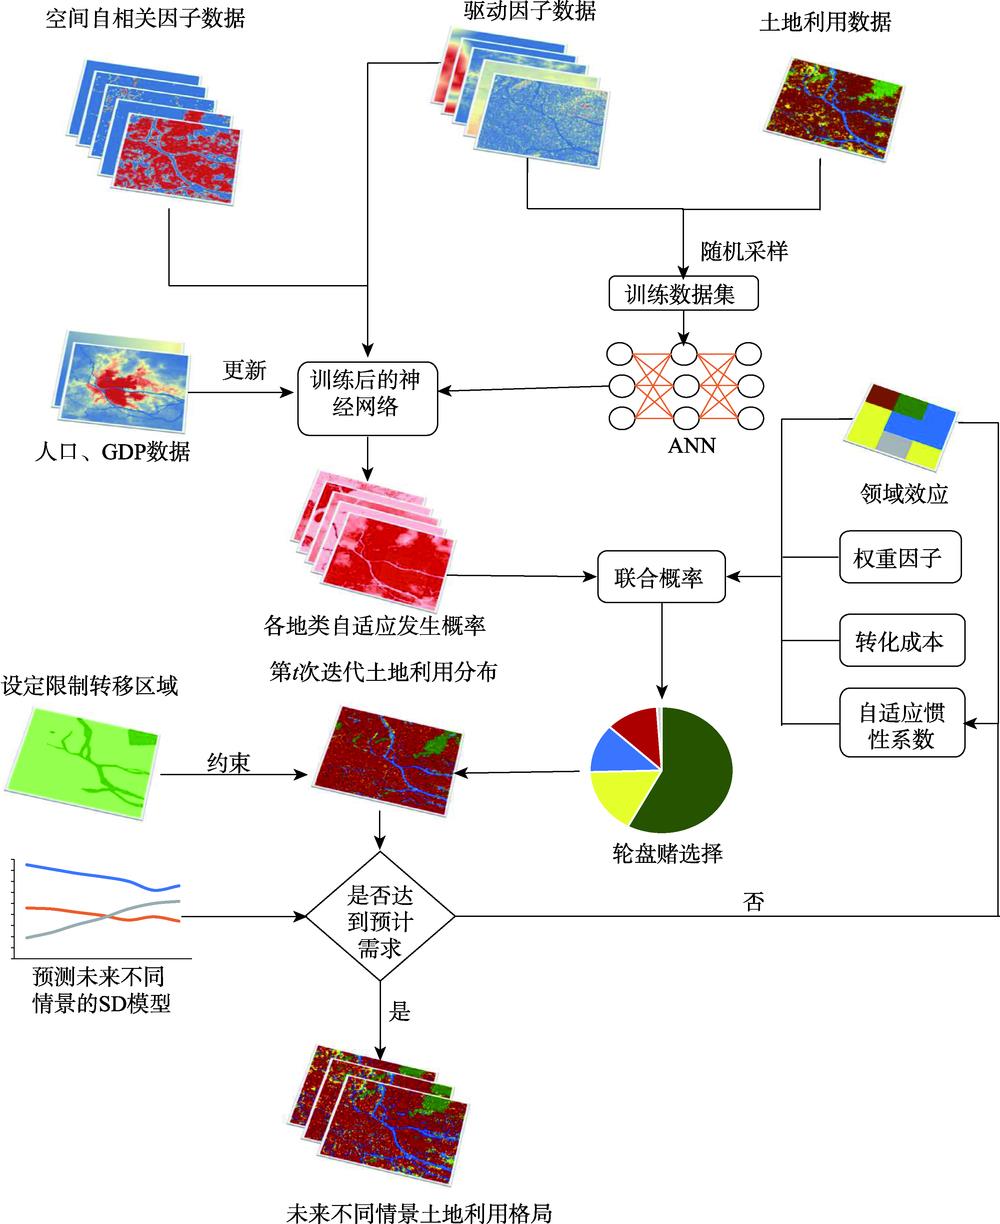 Schematic framework of the FLUS model